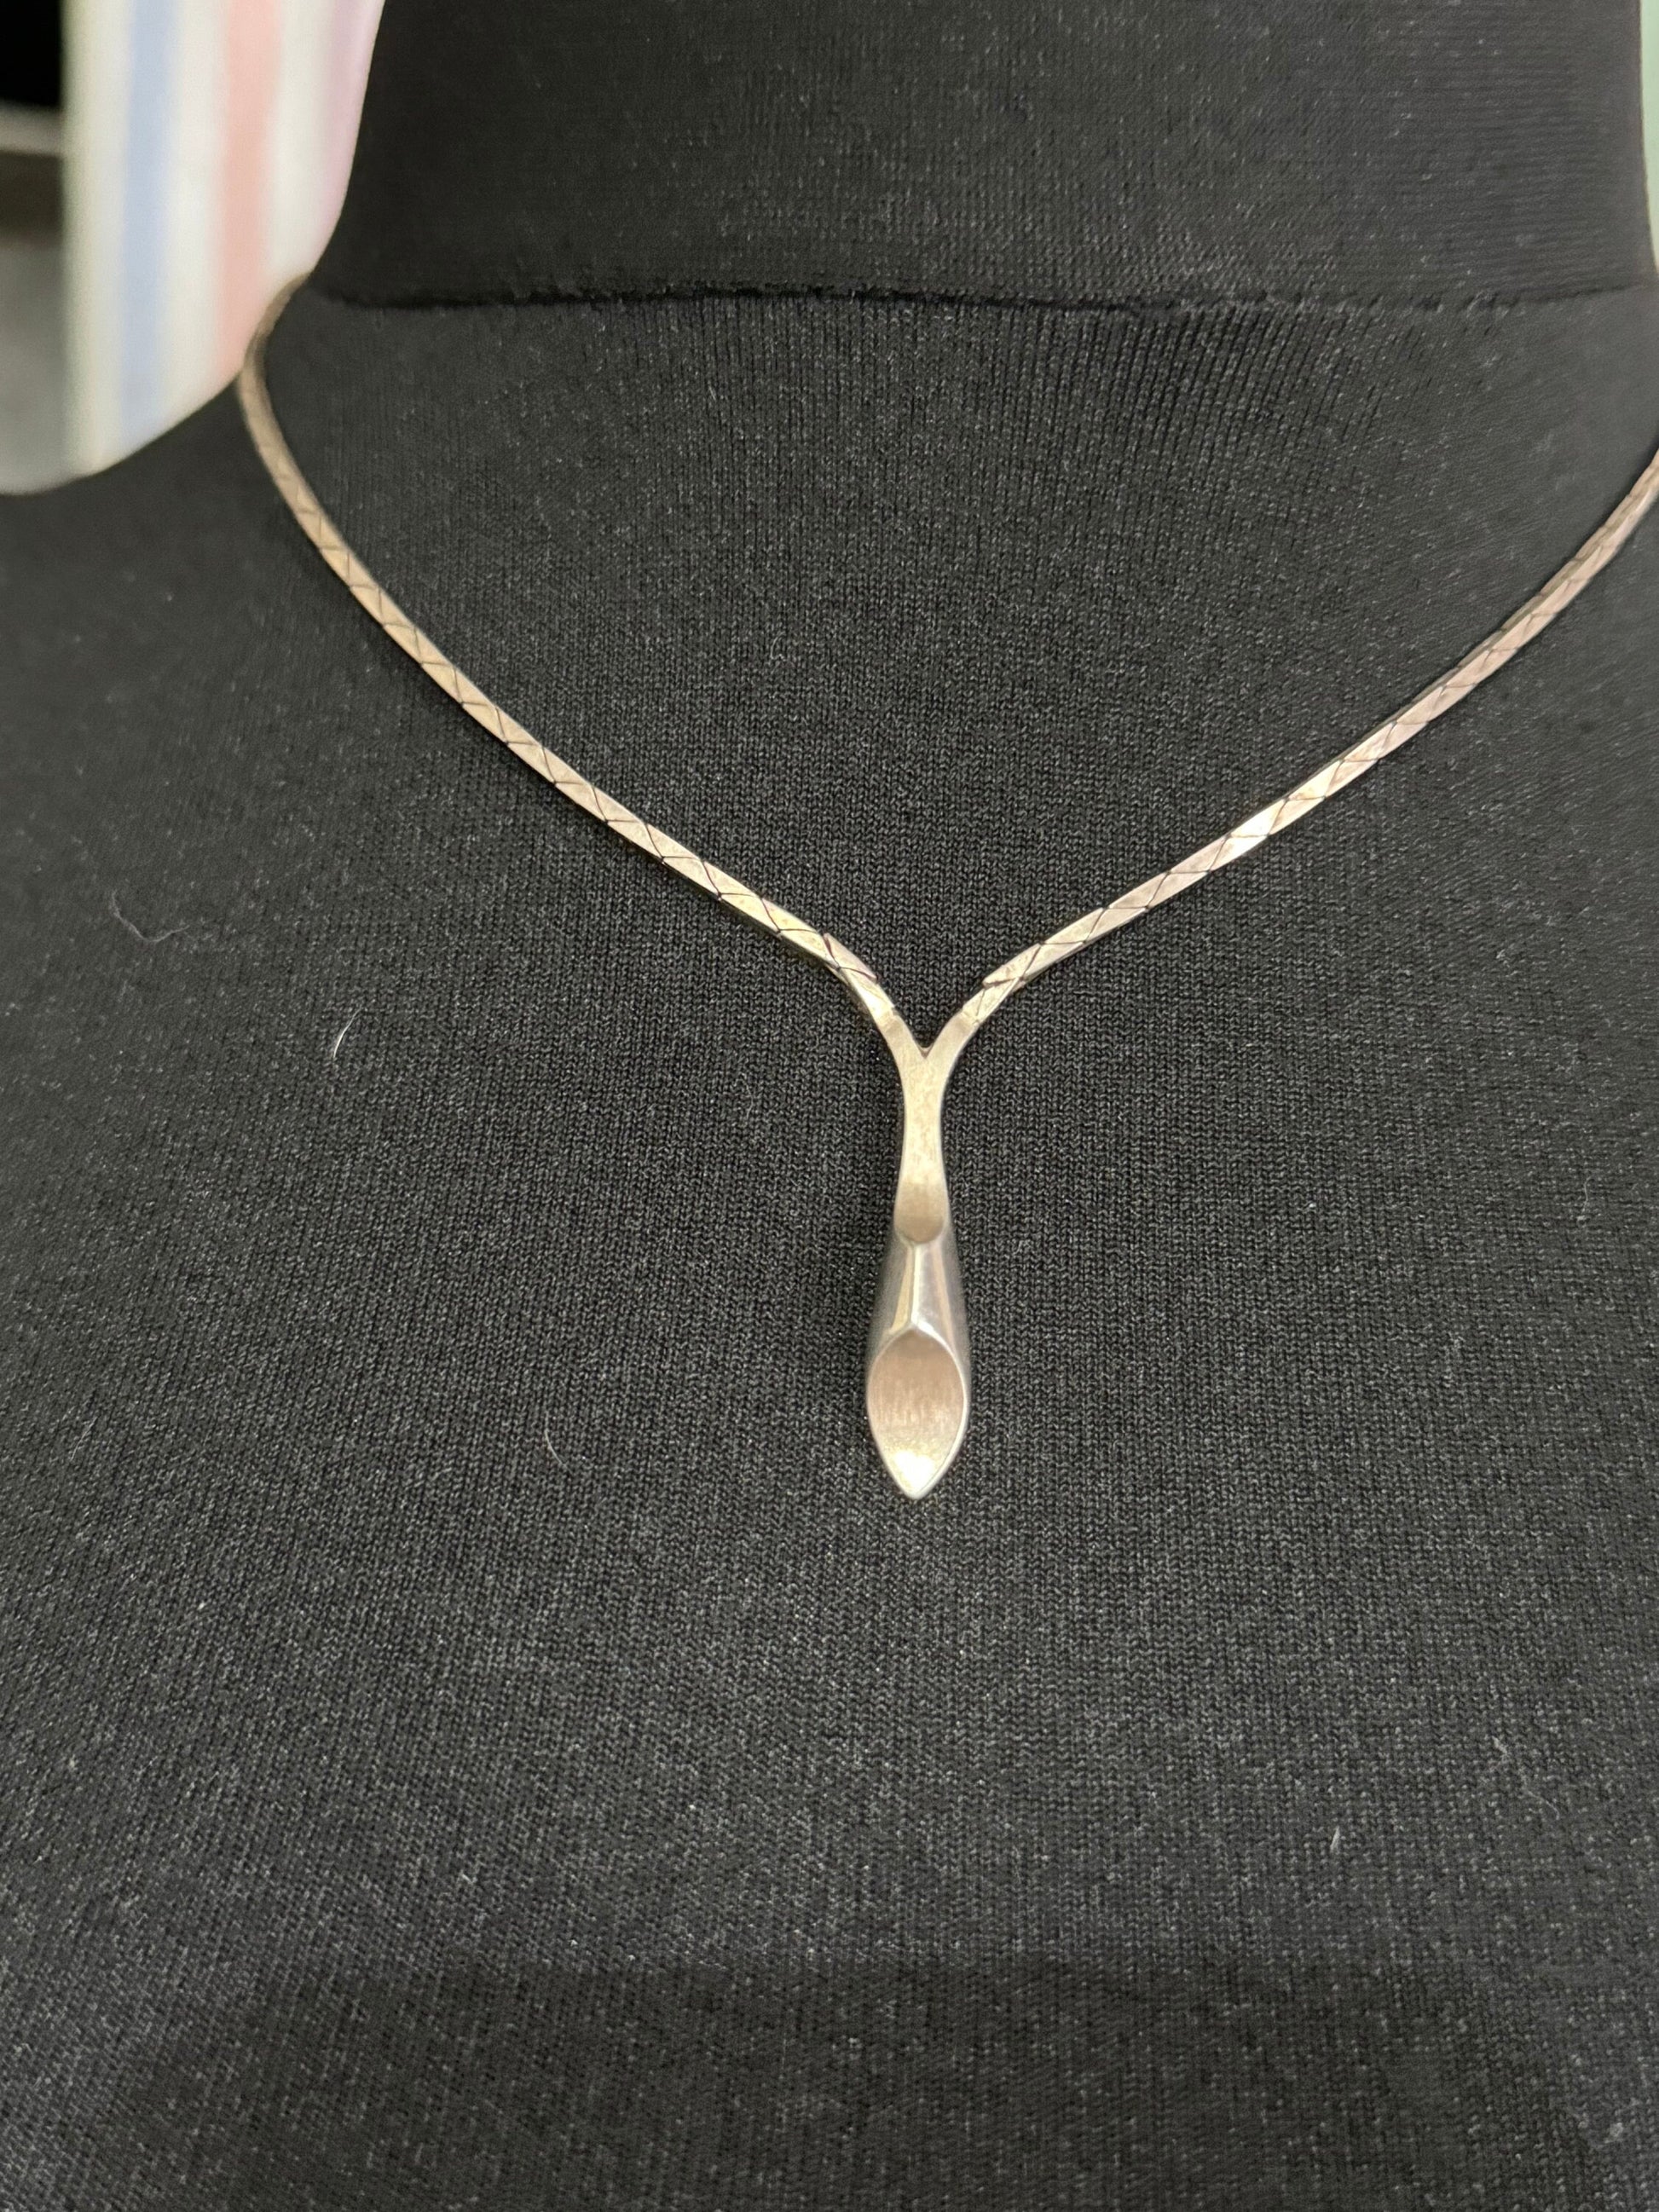 1970s 925 Sterling silver vintage flat link pendant lariat drop necklace 45cm 10.6 grams